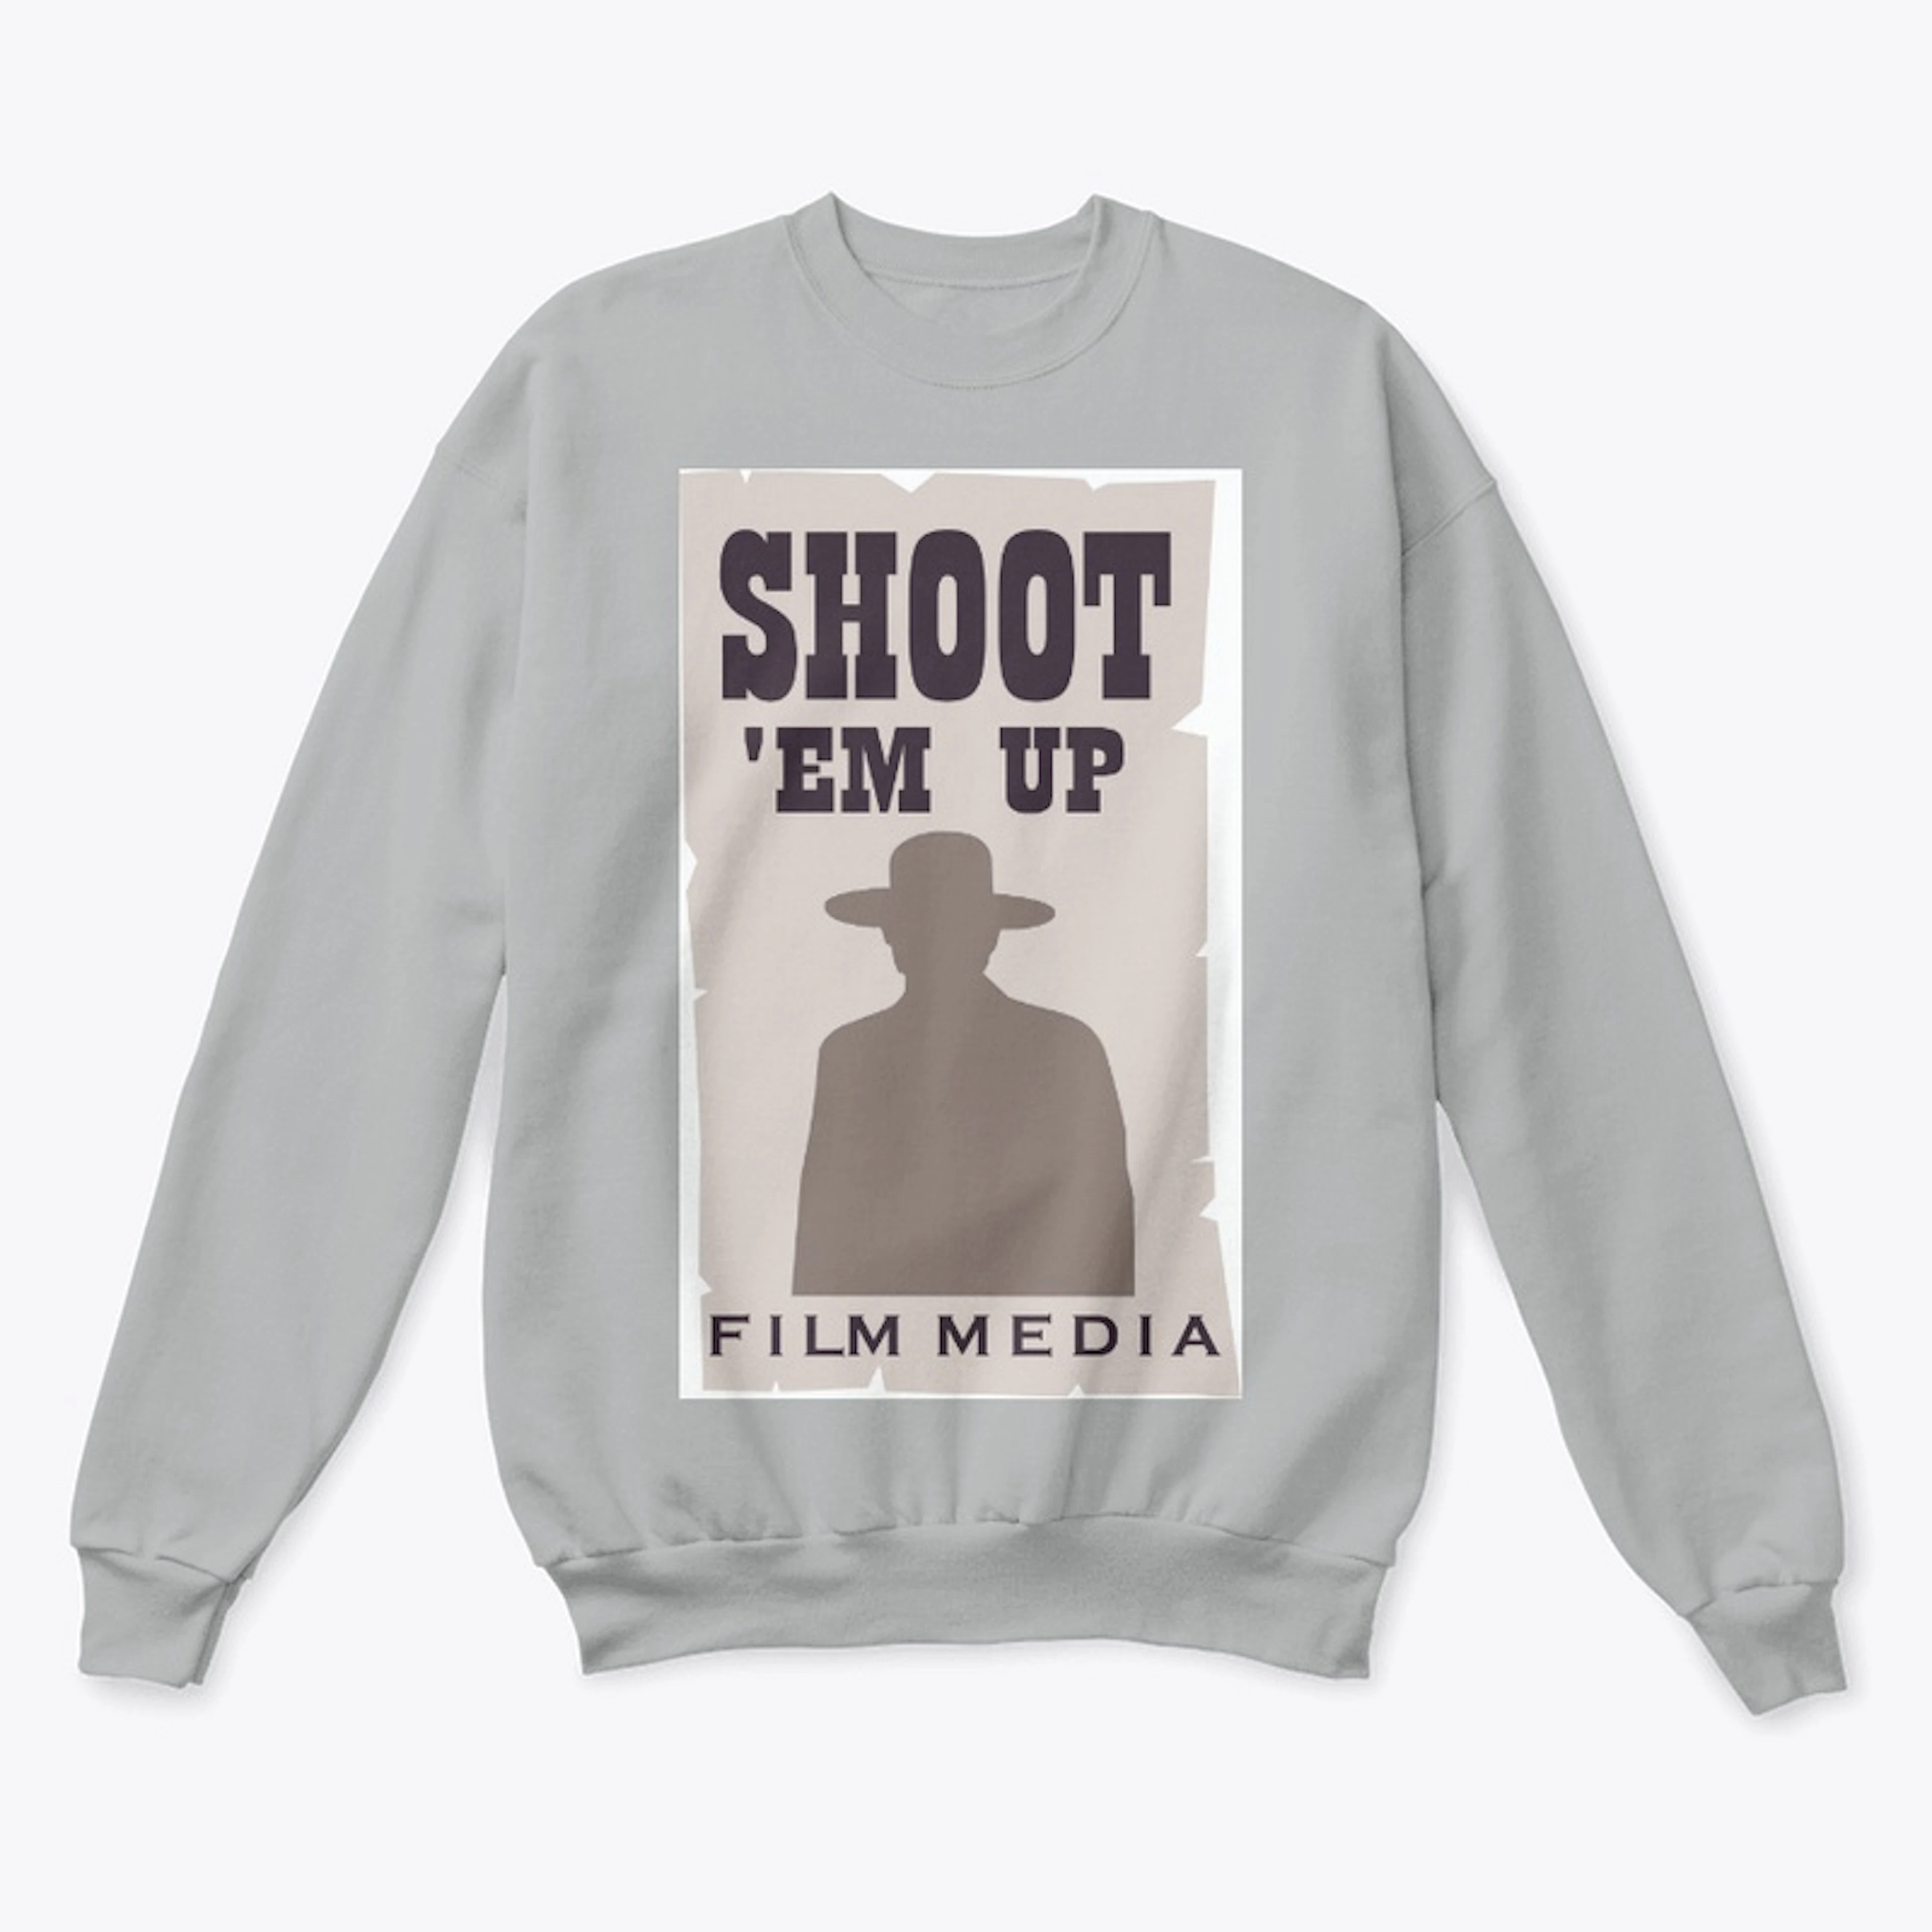 Shoot Em Up Film Media.  